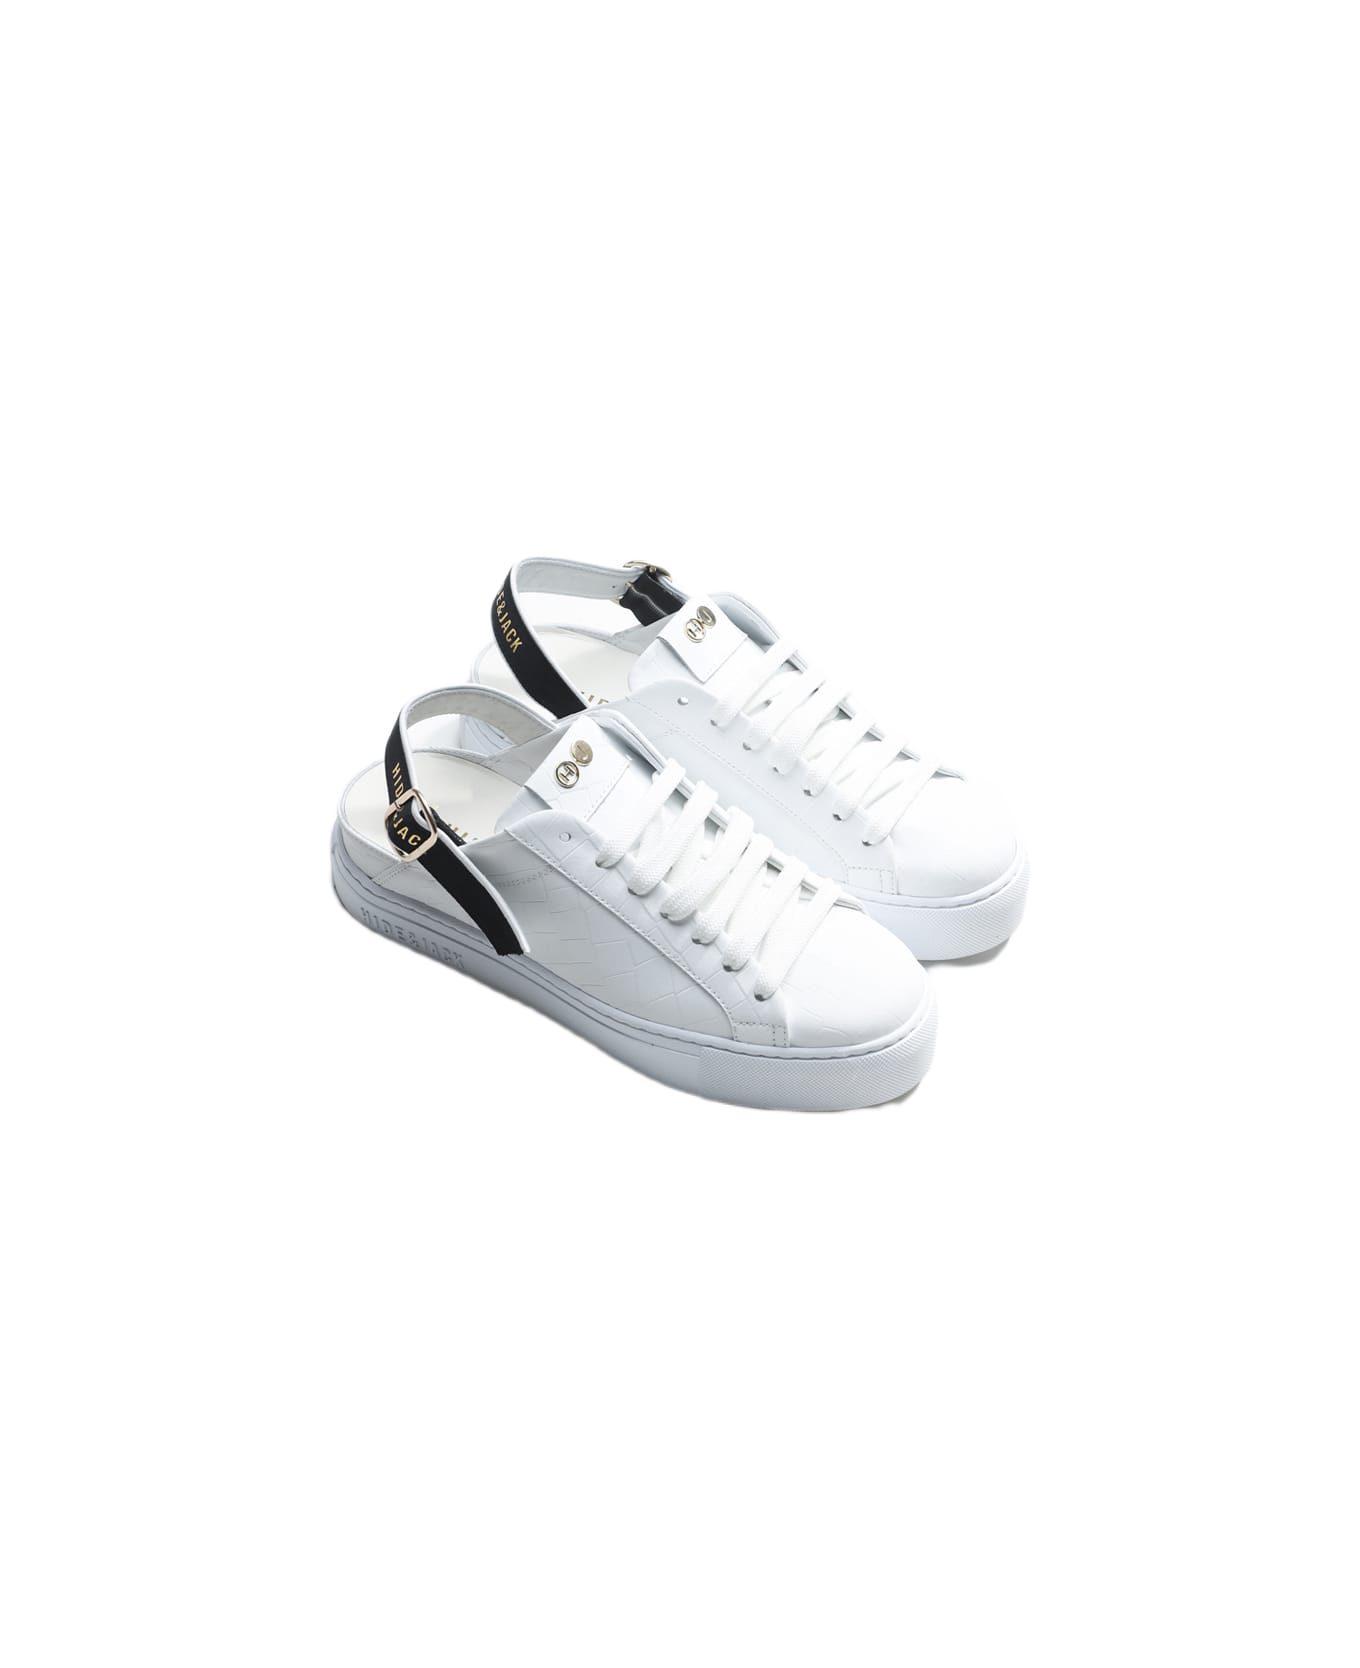 Hide&Jack Low Top Sneaker - Sabot White スニーカー